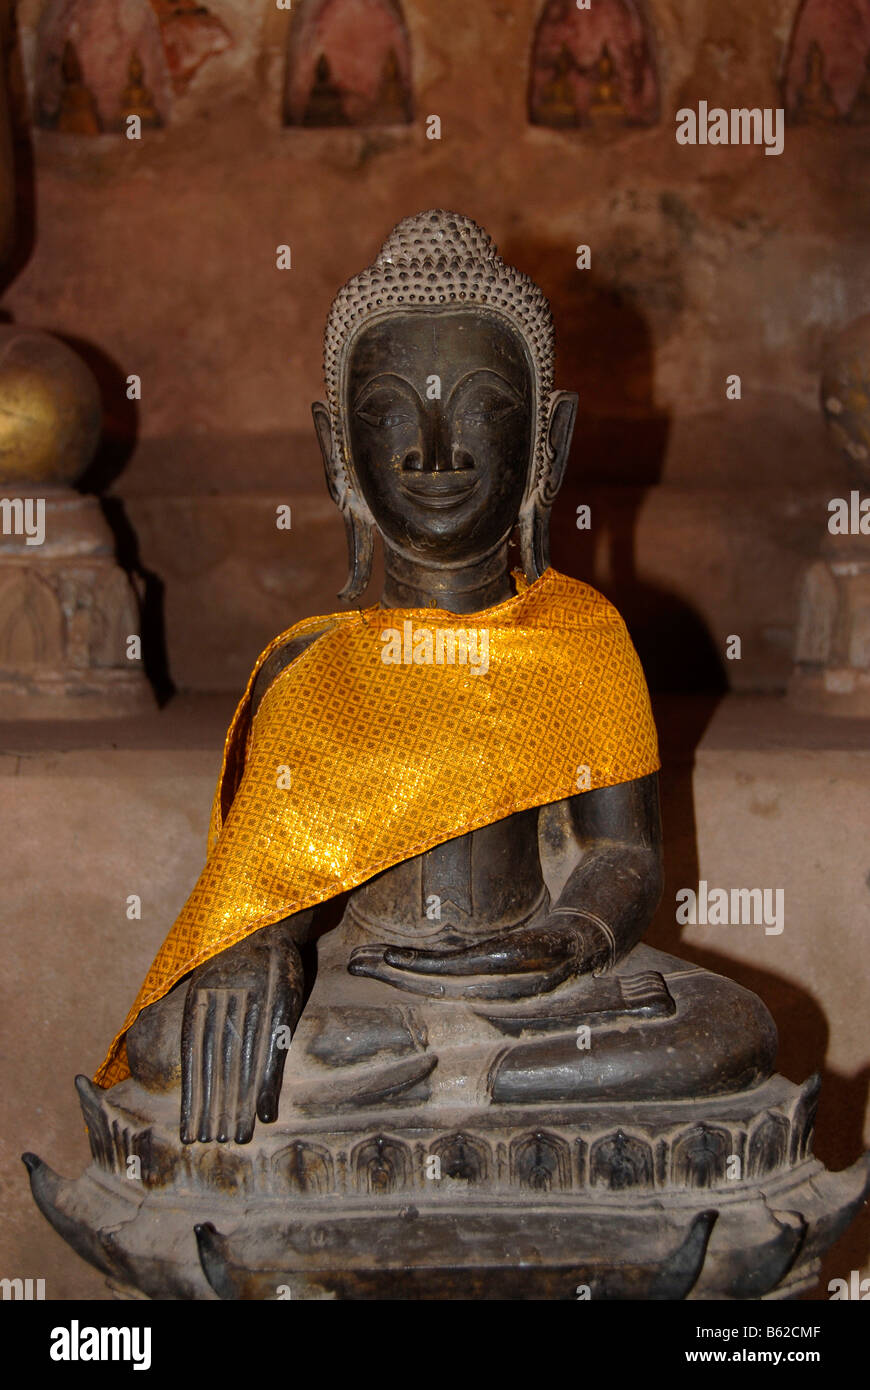 Sitting old bronze Buddha statue, Wat Sisaket, Vientiane, Laos, South East Asia Stock Photo